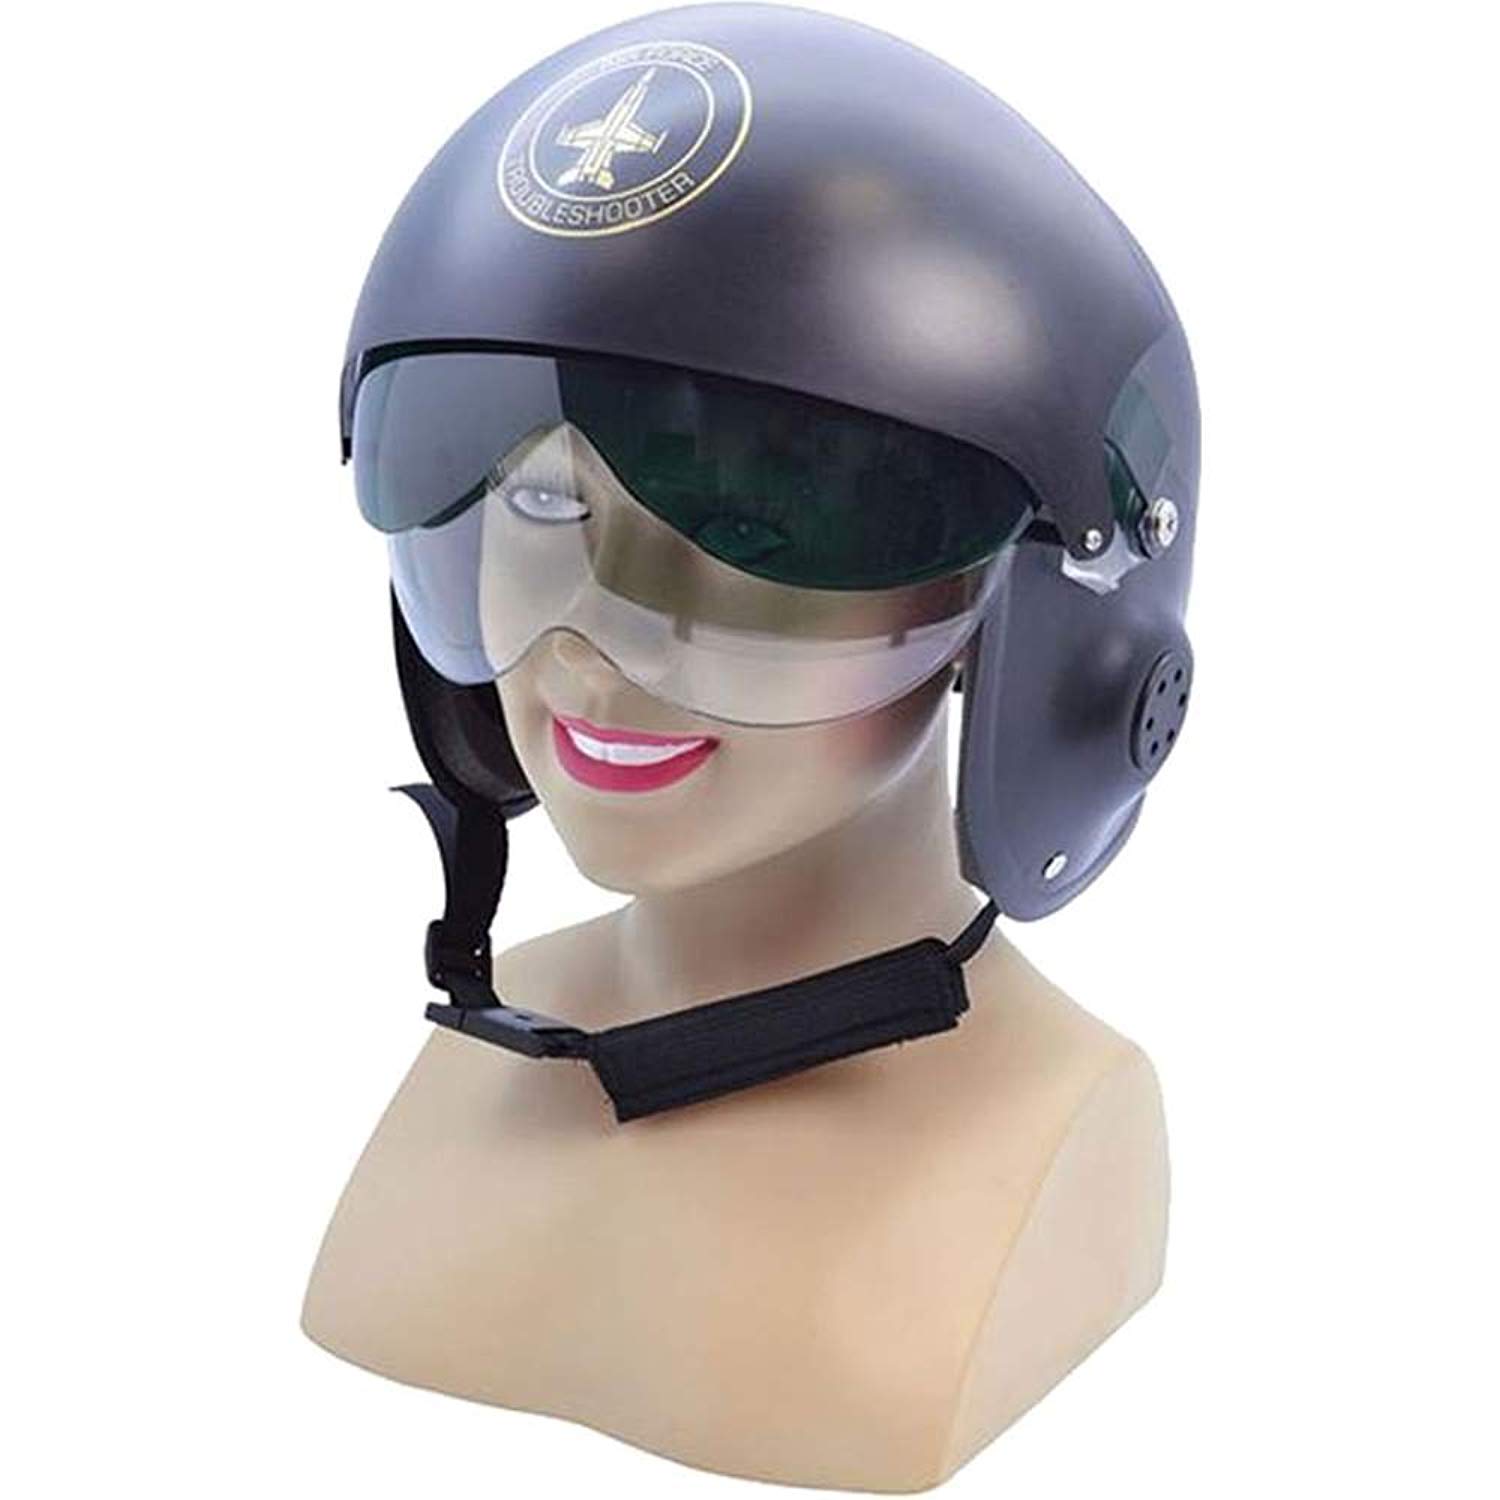 Amazon.com: Fighter Pilot Helmet: Clothing